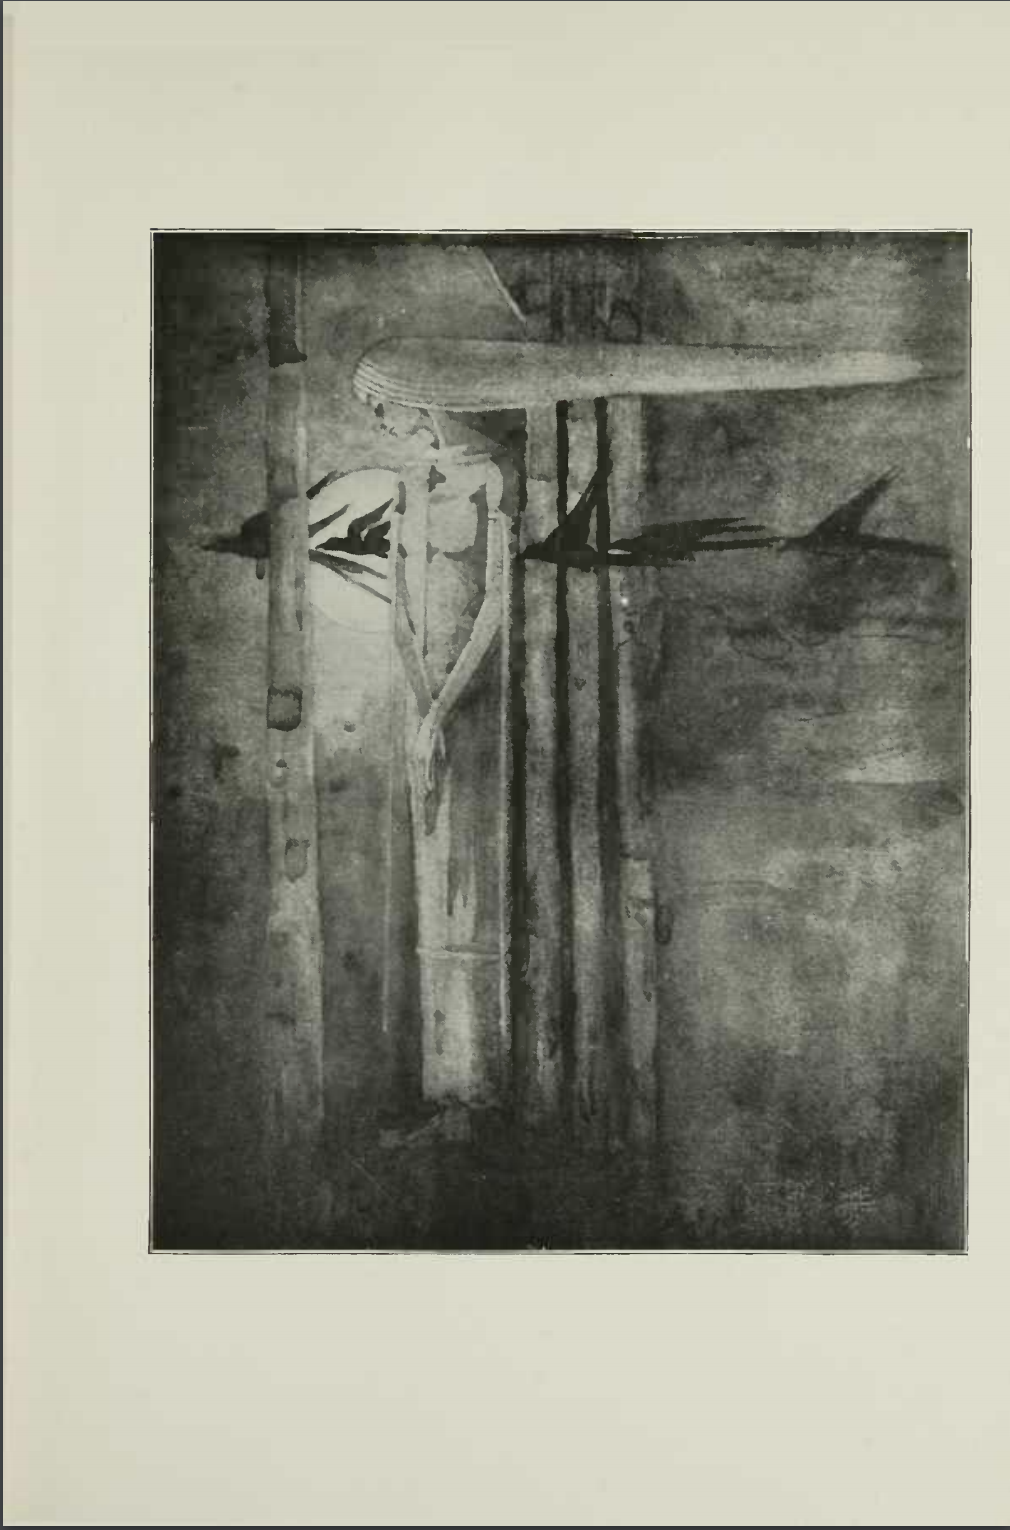 Black and White Image of Frances Macdonald's "Ill Omen".